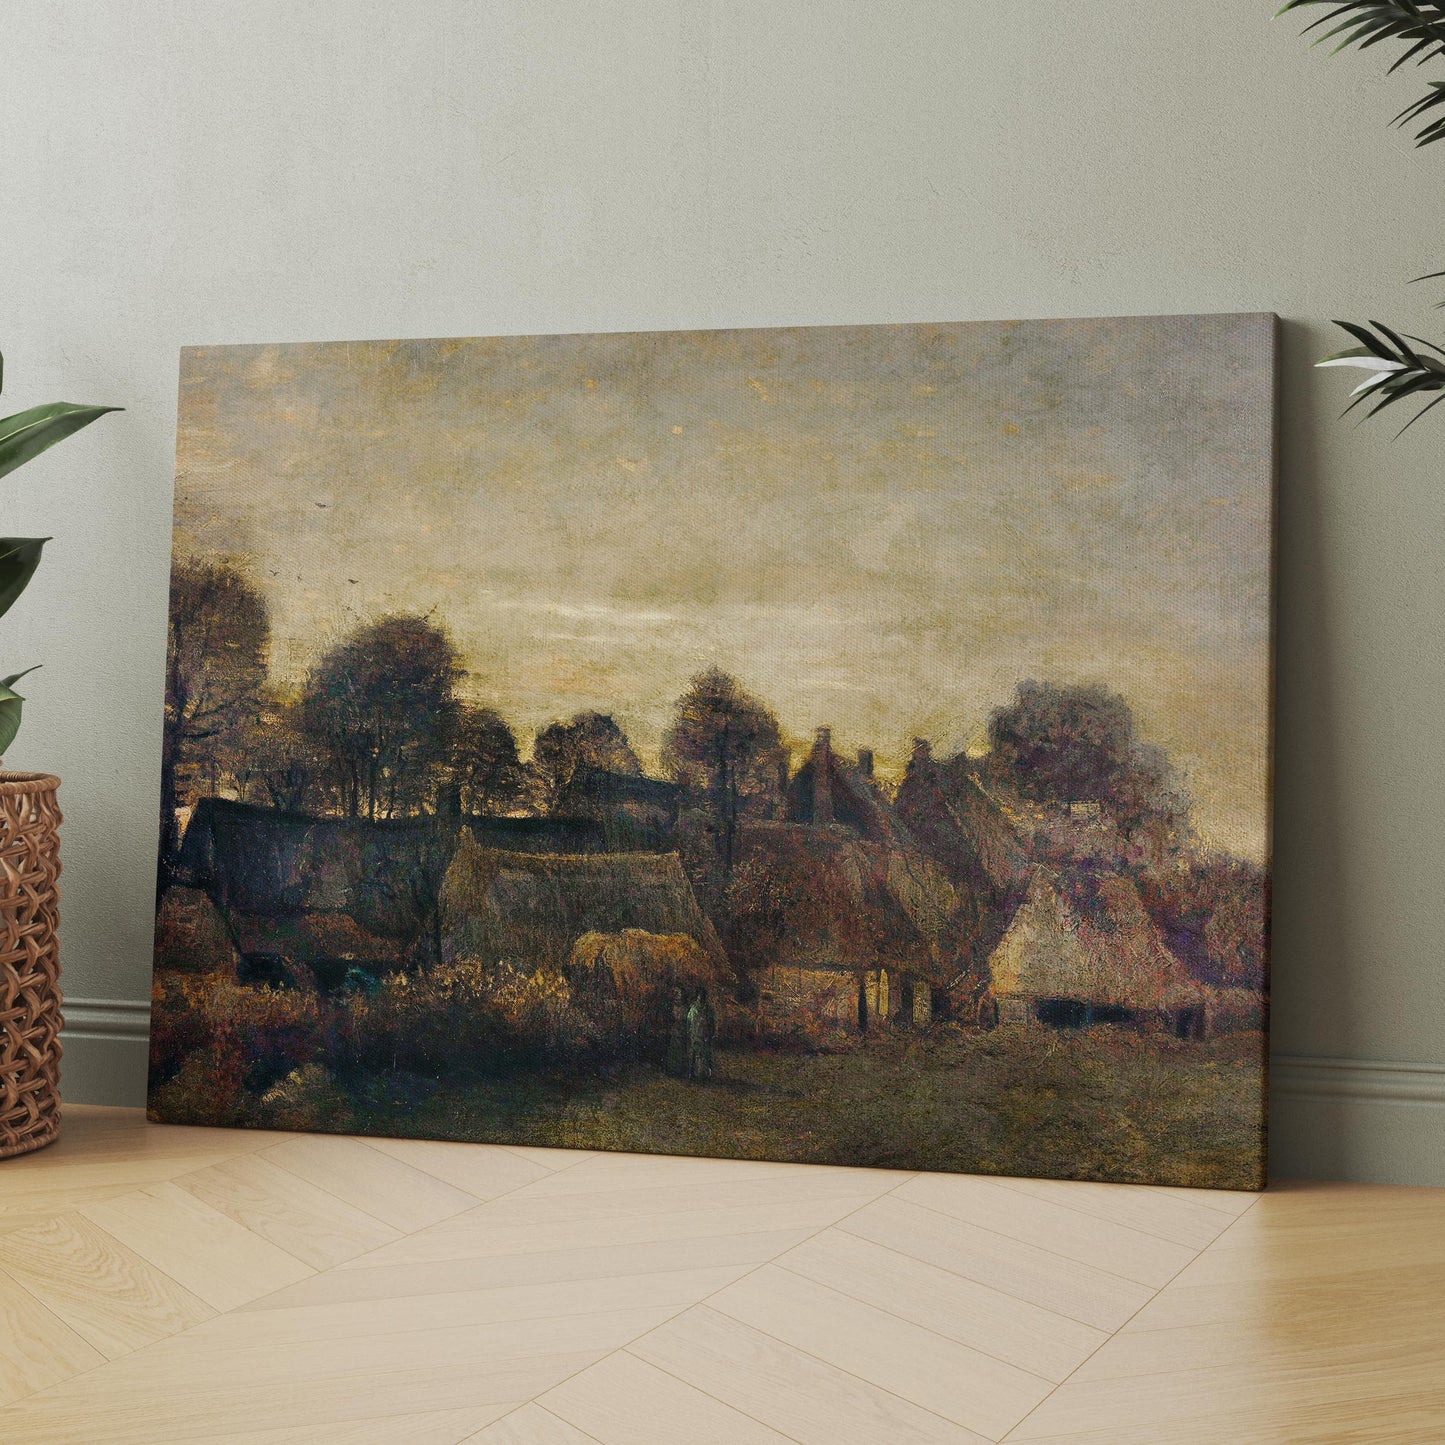 Farming Village at Twilight (1884) by Van Gogh